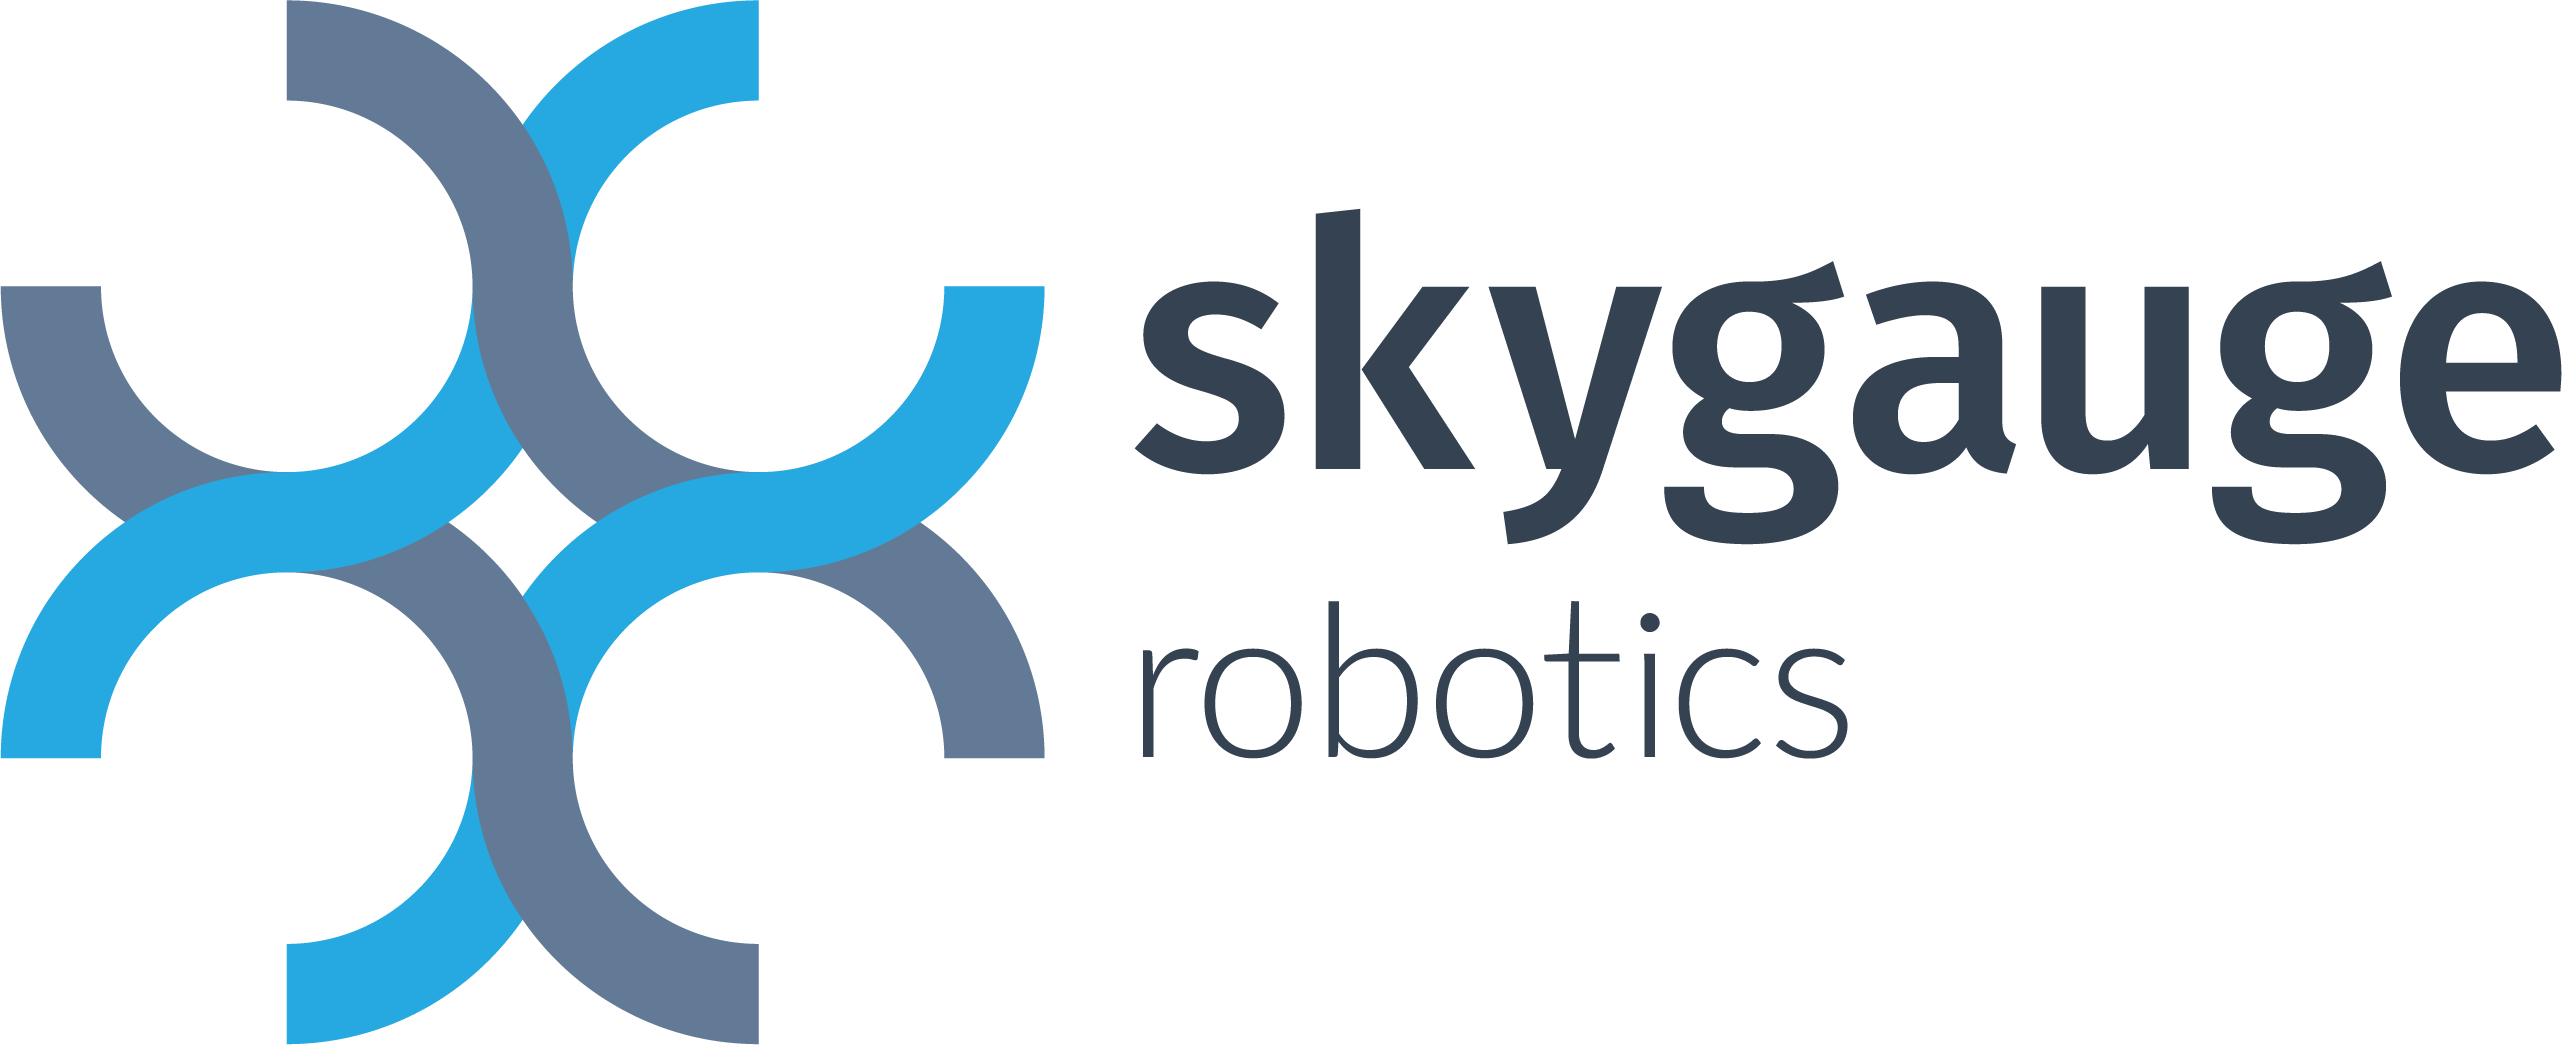 Skygauge Robotics